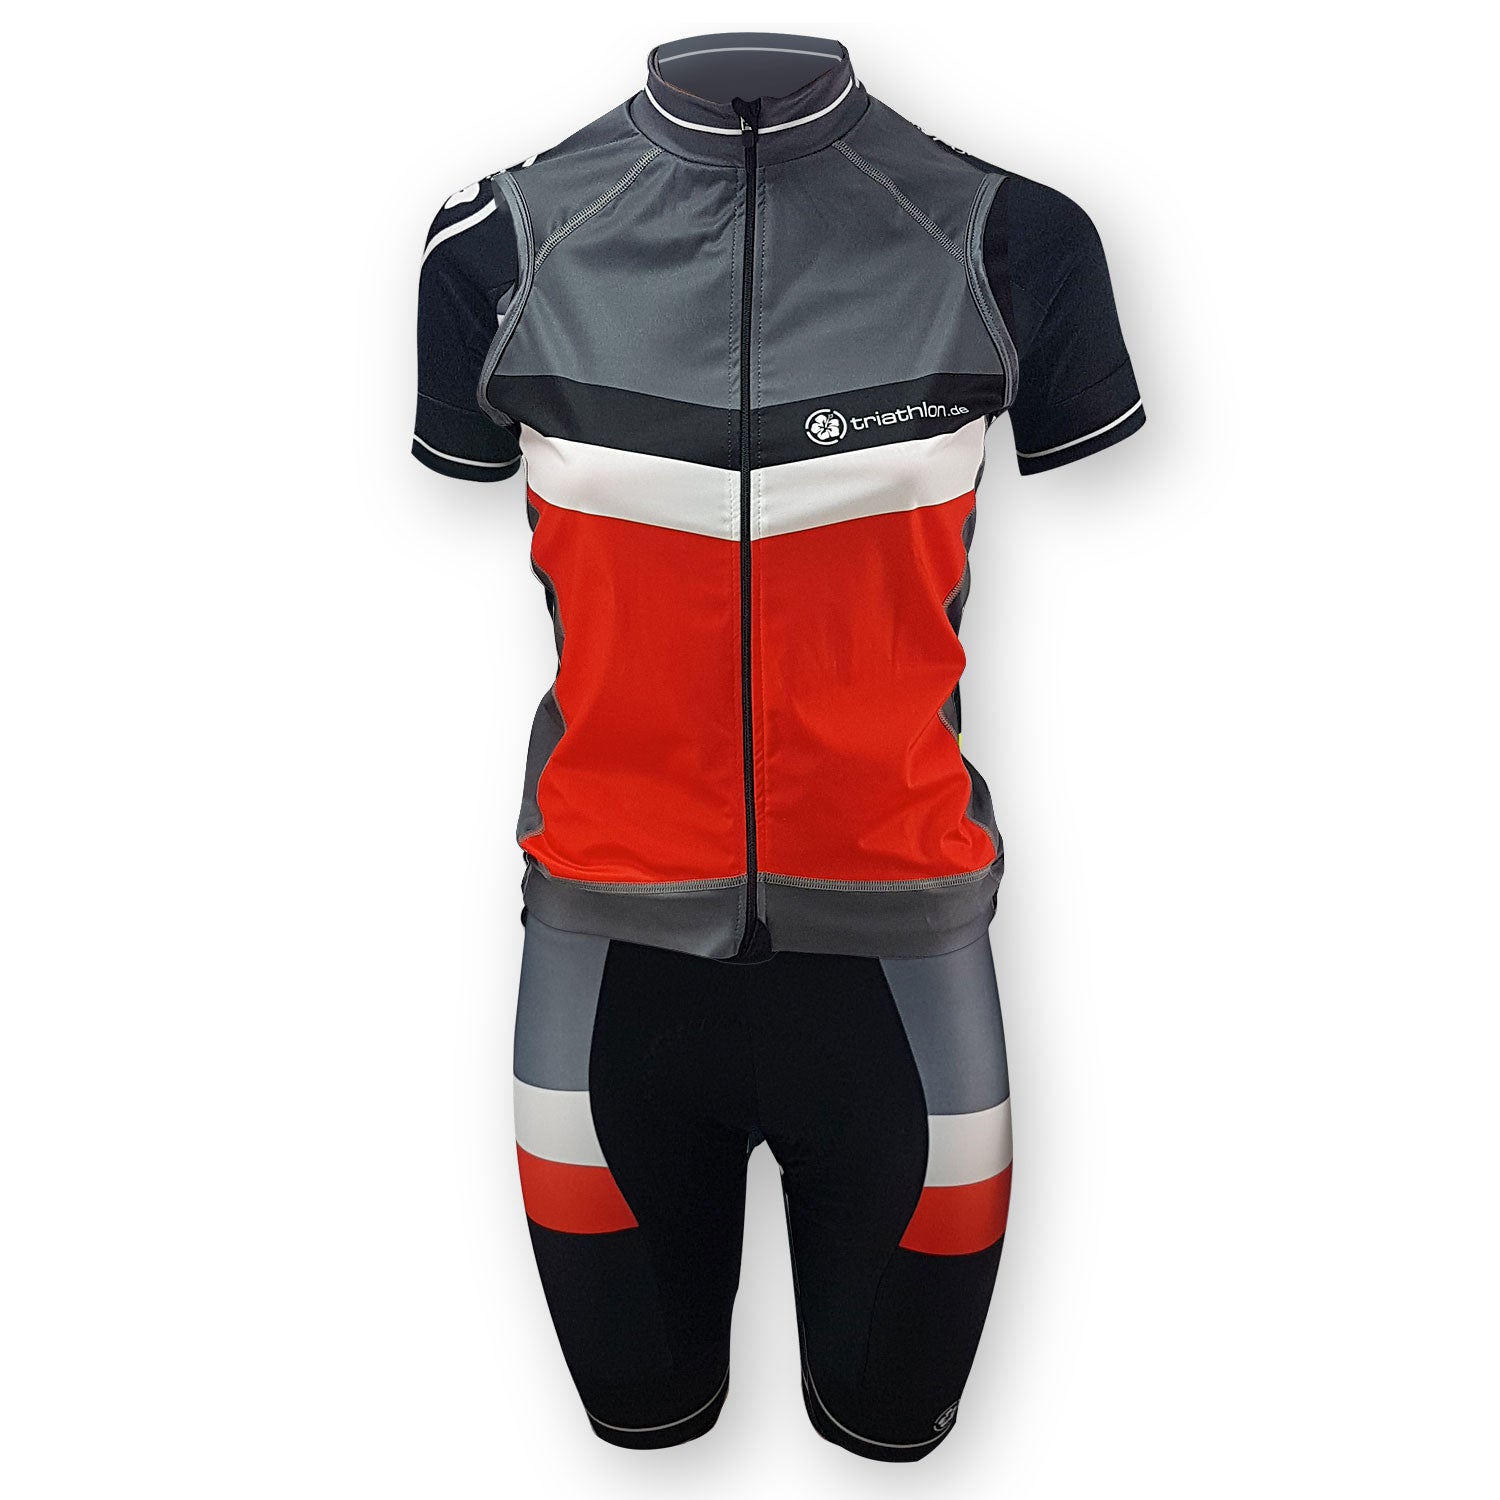 triathlon.de elite cycling vest, women, black/grey/red